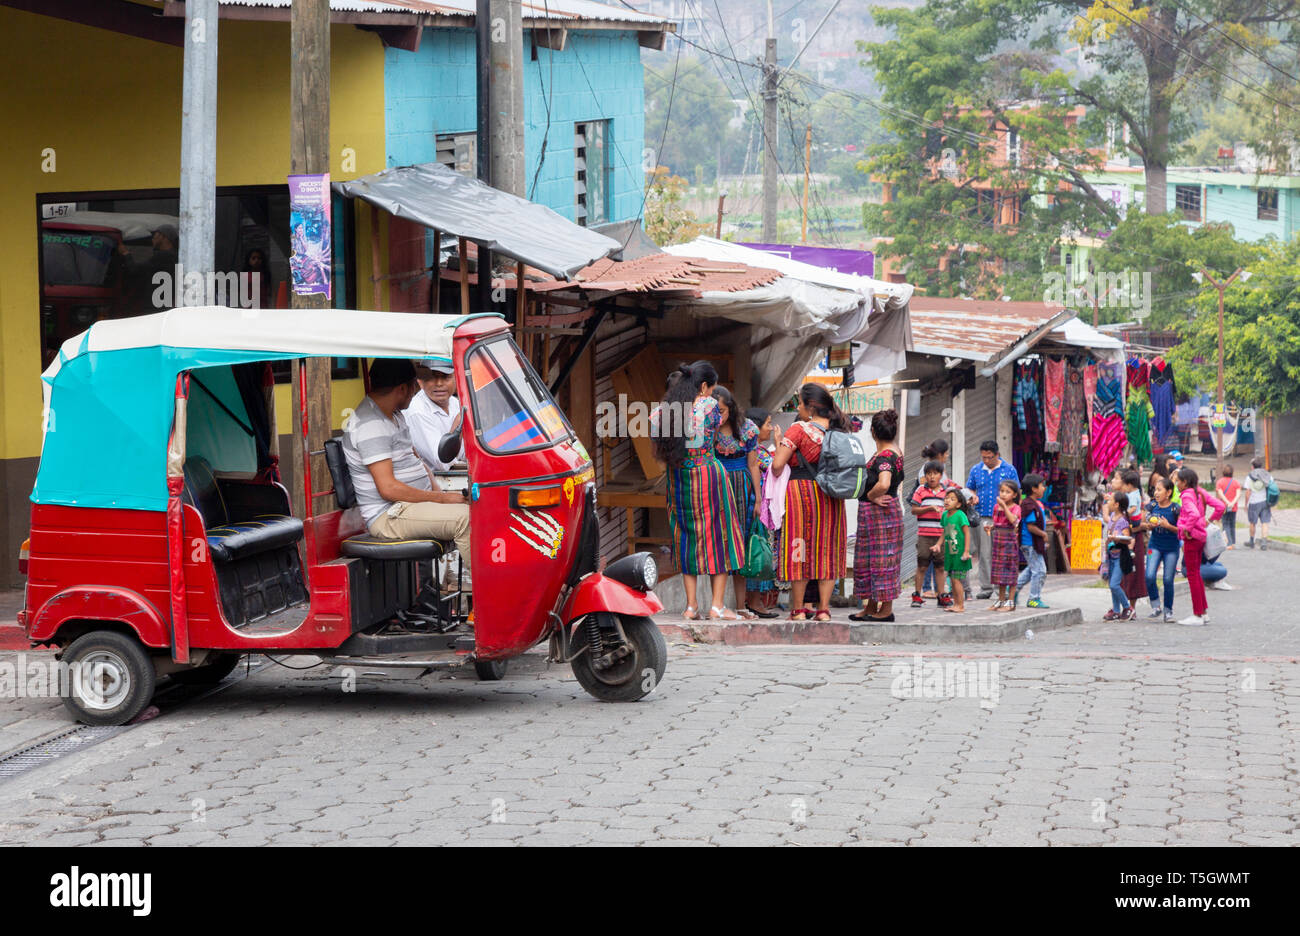 Guatemala Lifestyle, Lateinamerika - Straßenszene mit tuk tuk Taxi, Stadt Santiago Atitlan, Guatemala Lateinamerika Stockfoto